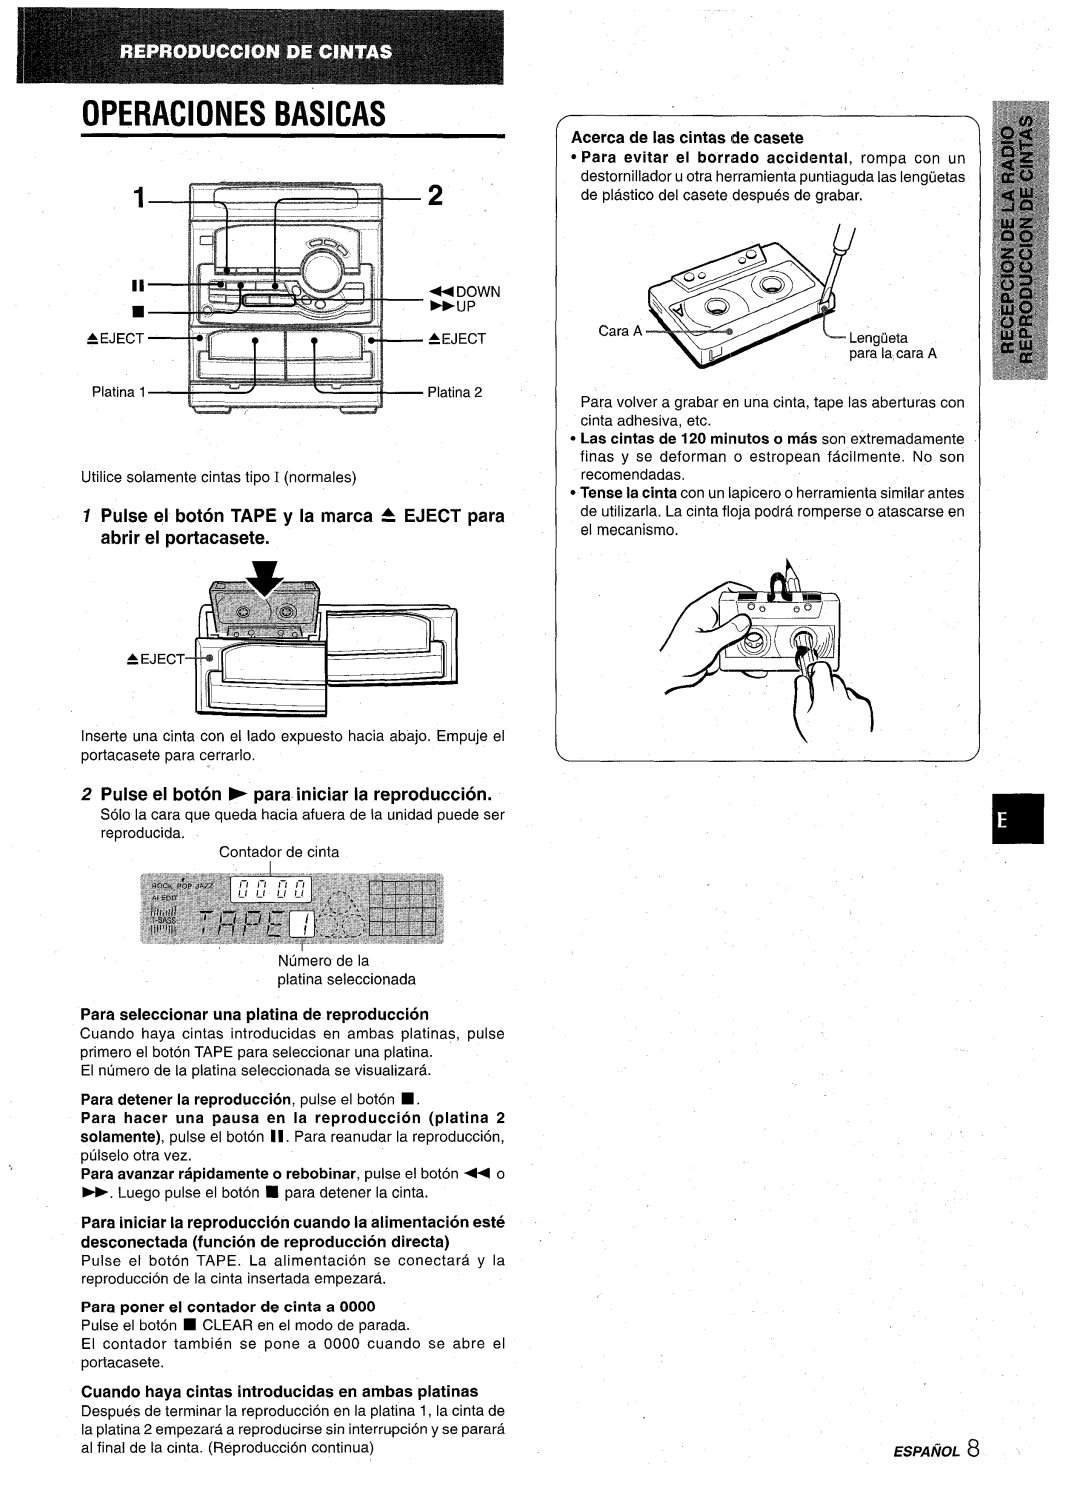 Aiwa CX-NA22 manual OPERAClONES BASICAS, Pulse el boton TAPE y la marca A EJECT para abrir el portacasete 